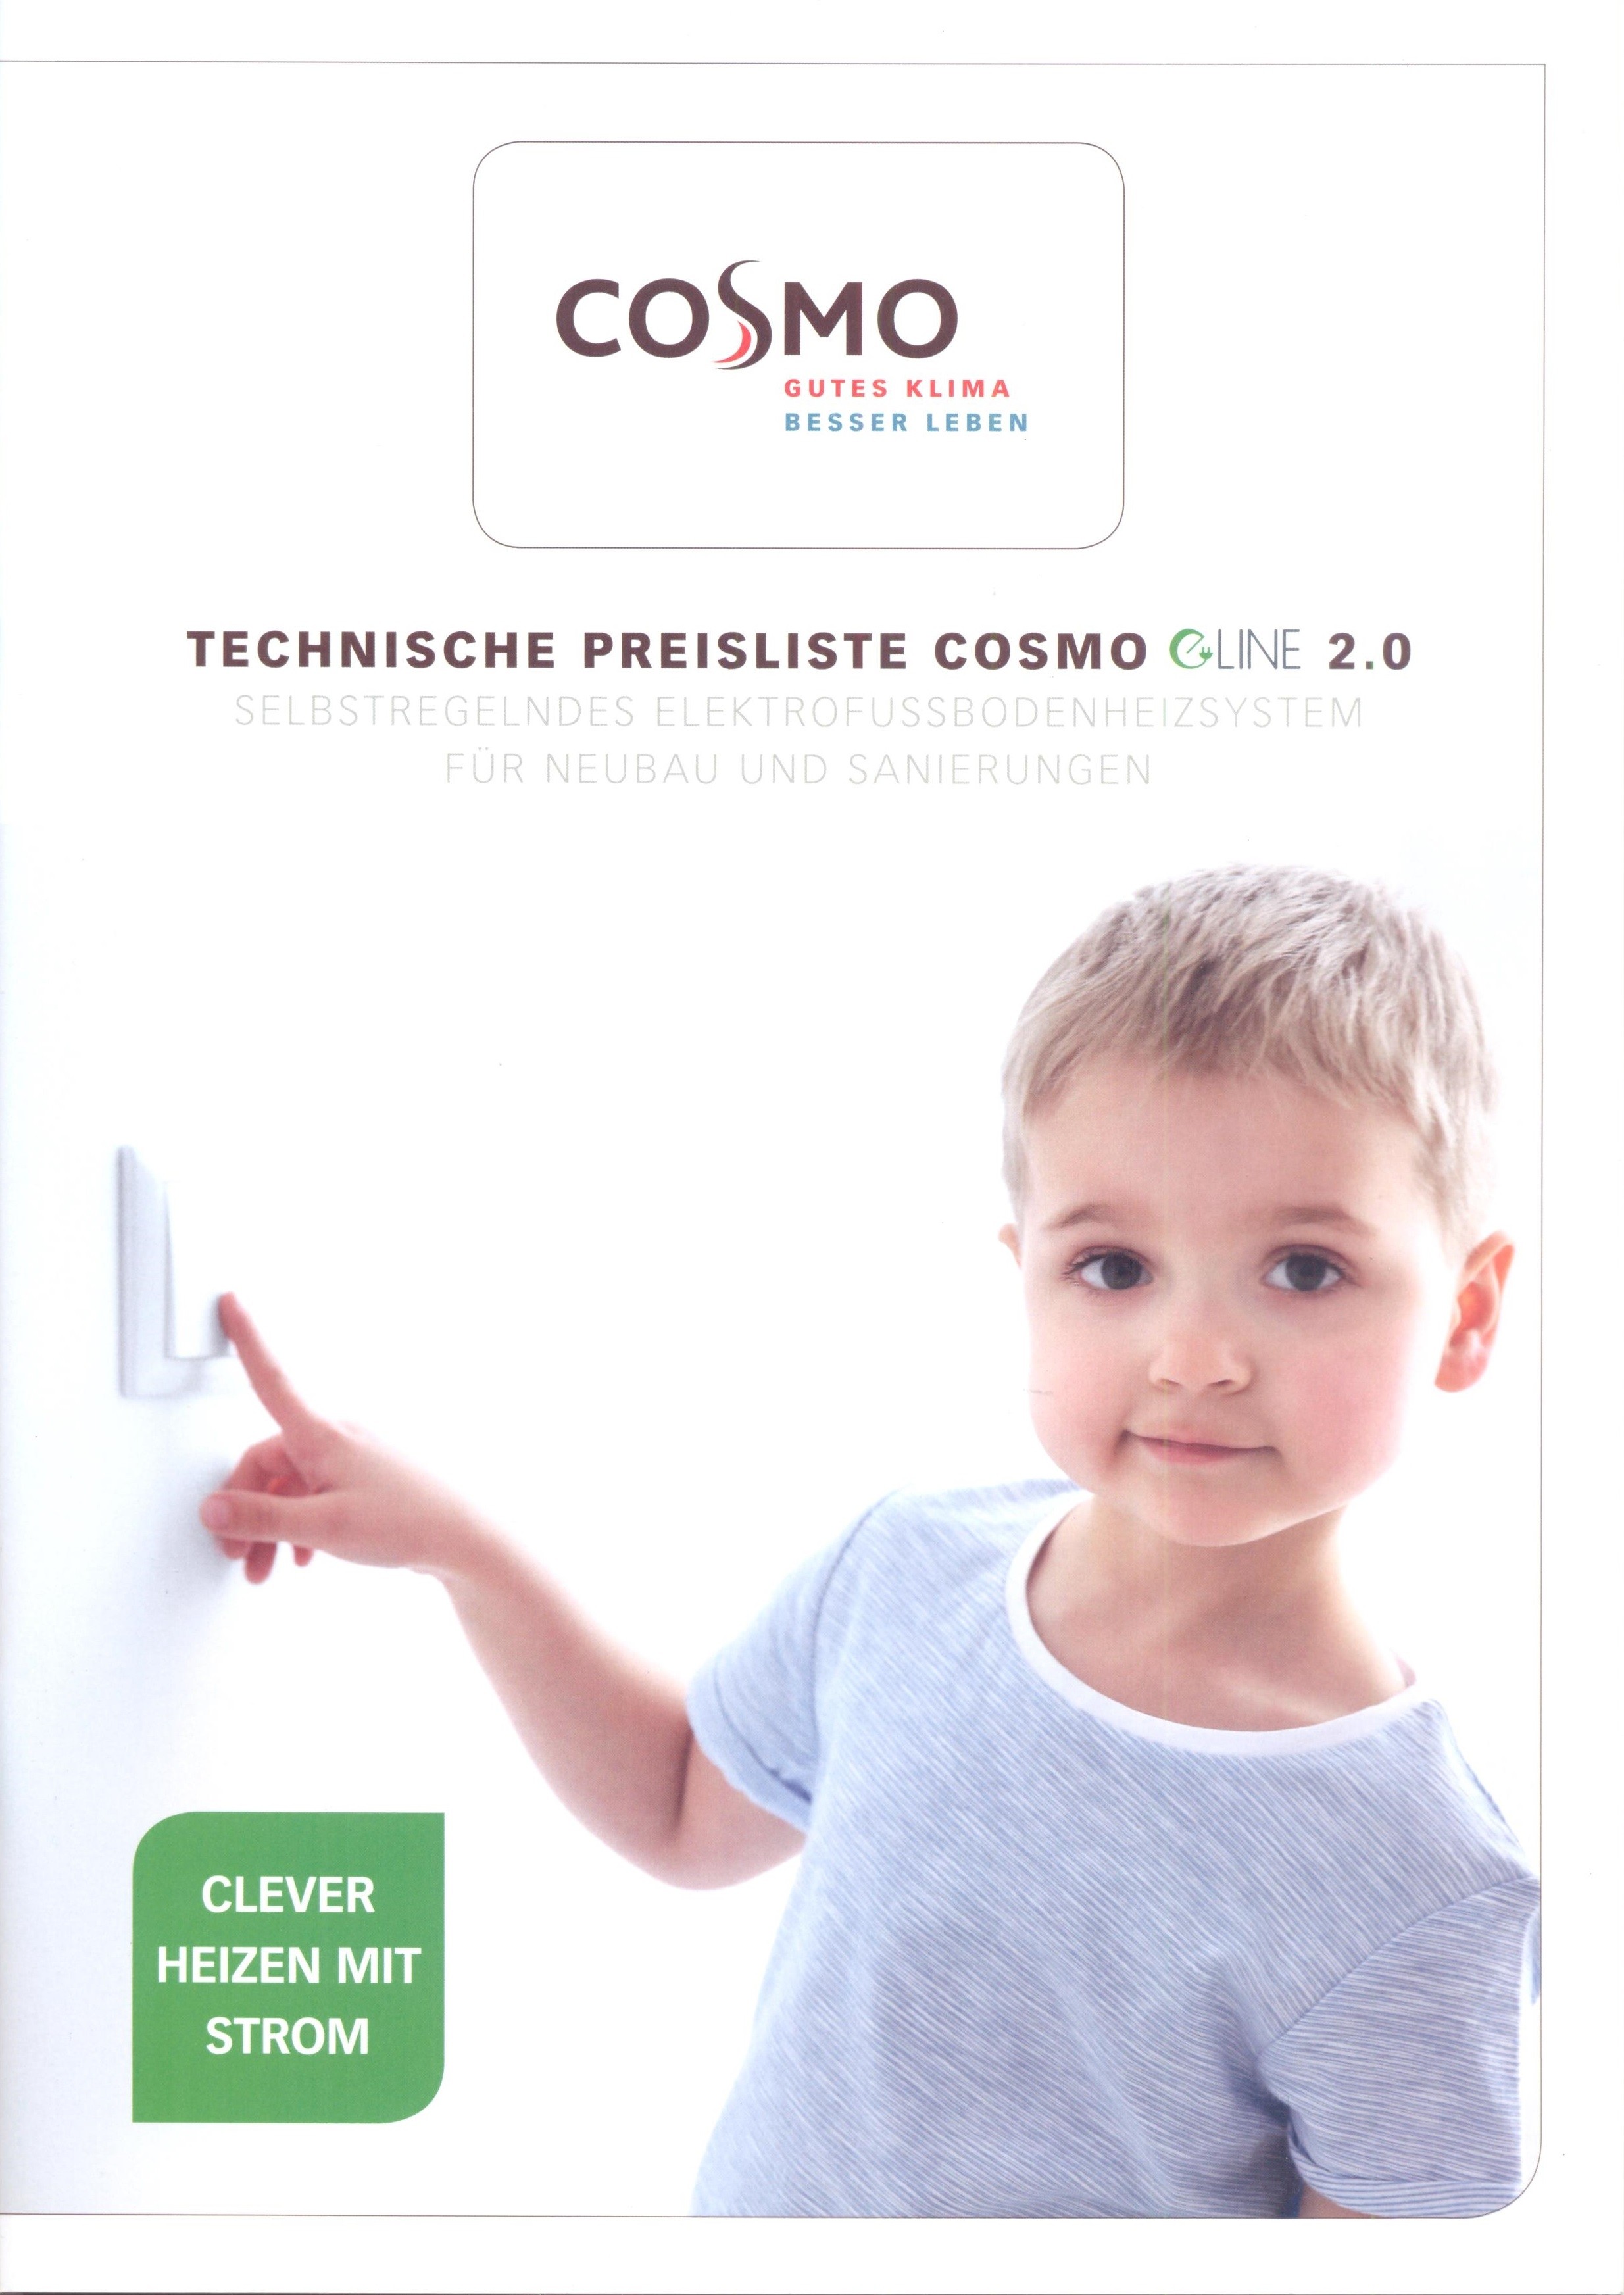 COSMO Technische Preisliste eline 2.0